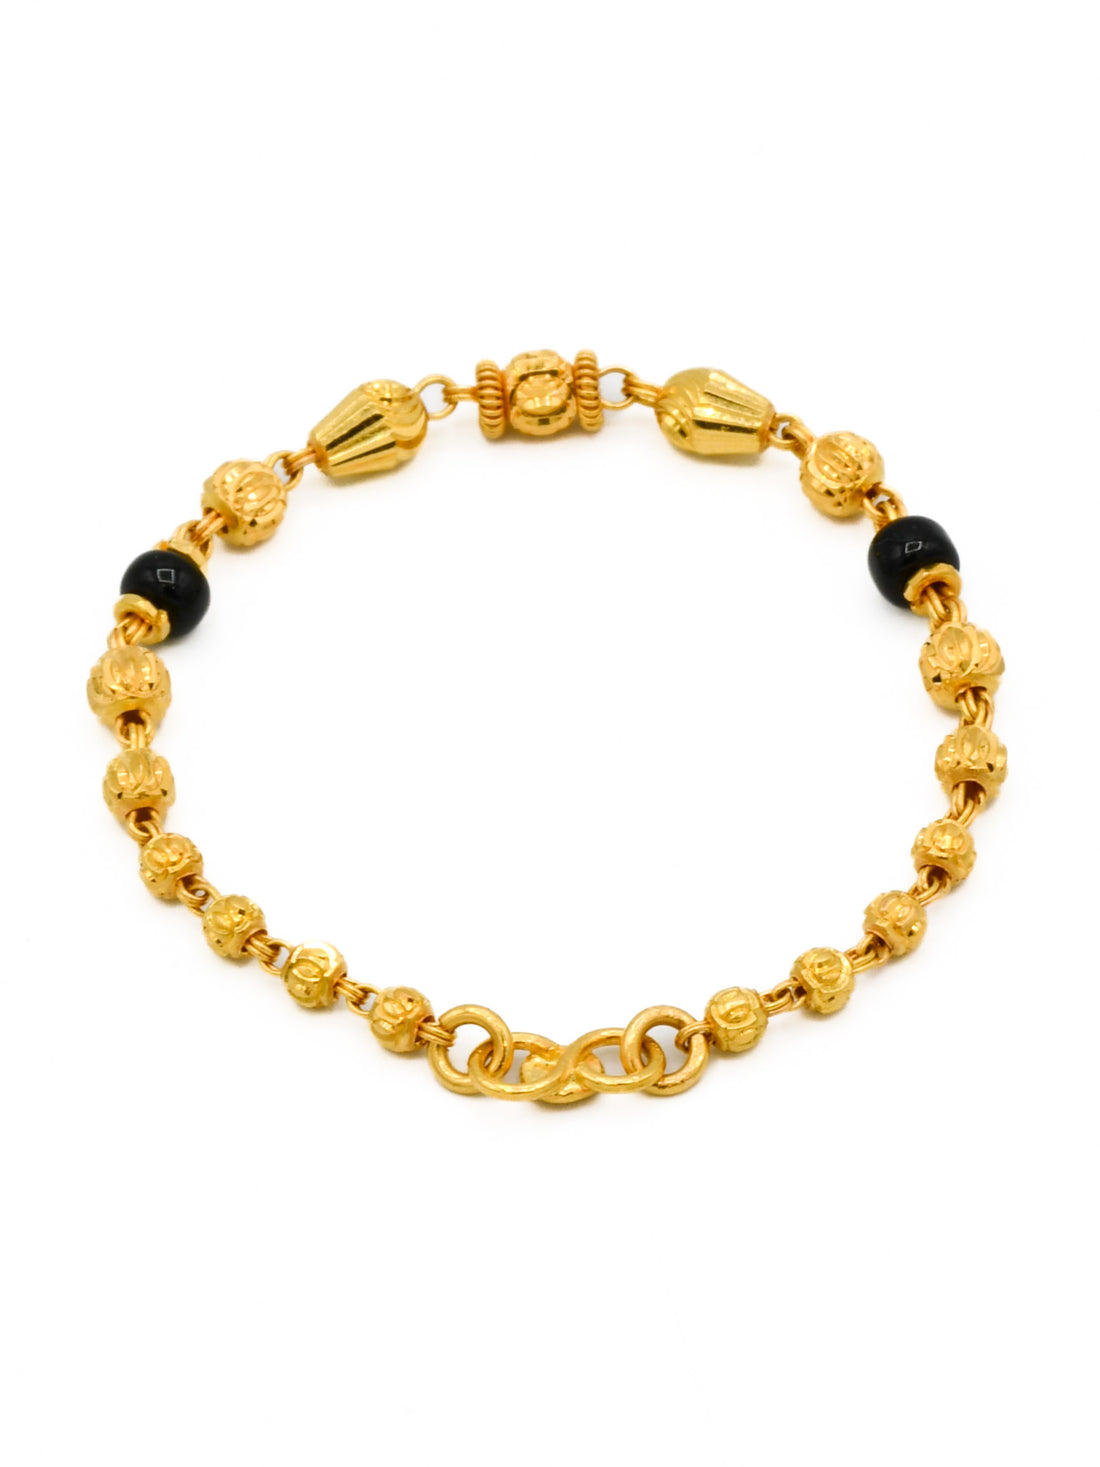 22ct Gold Black Beads Ball Pair Baby Bracelet - Roop Darshan